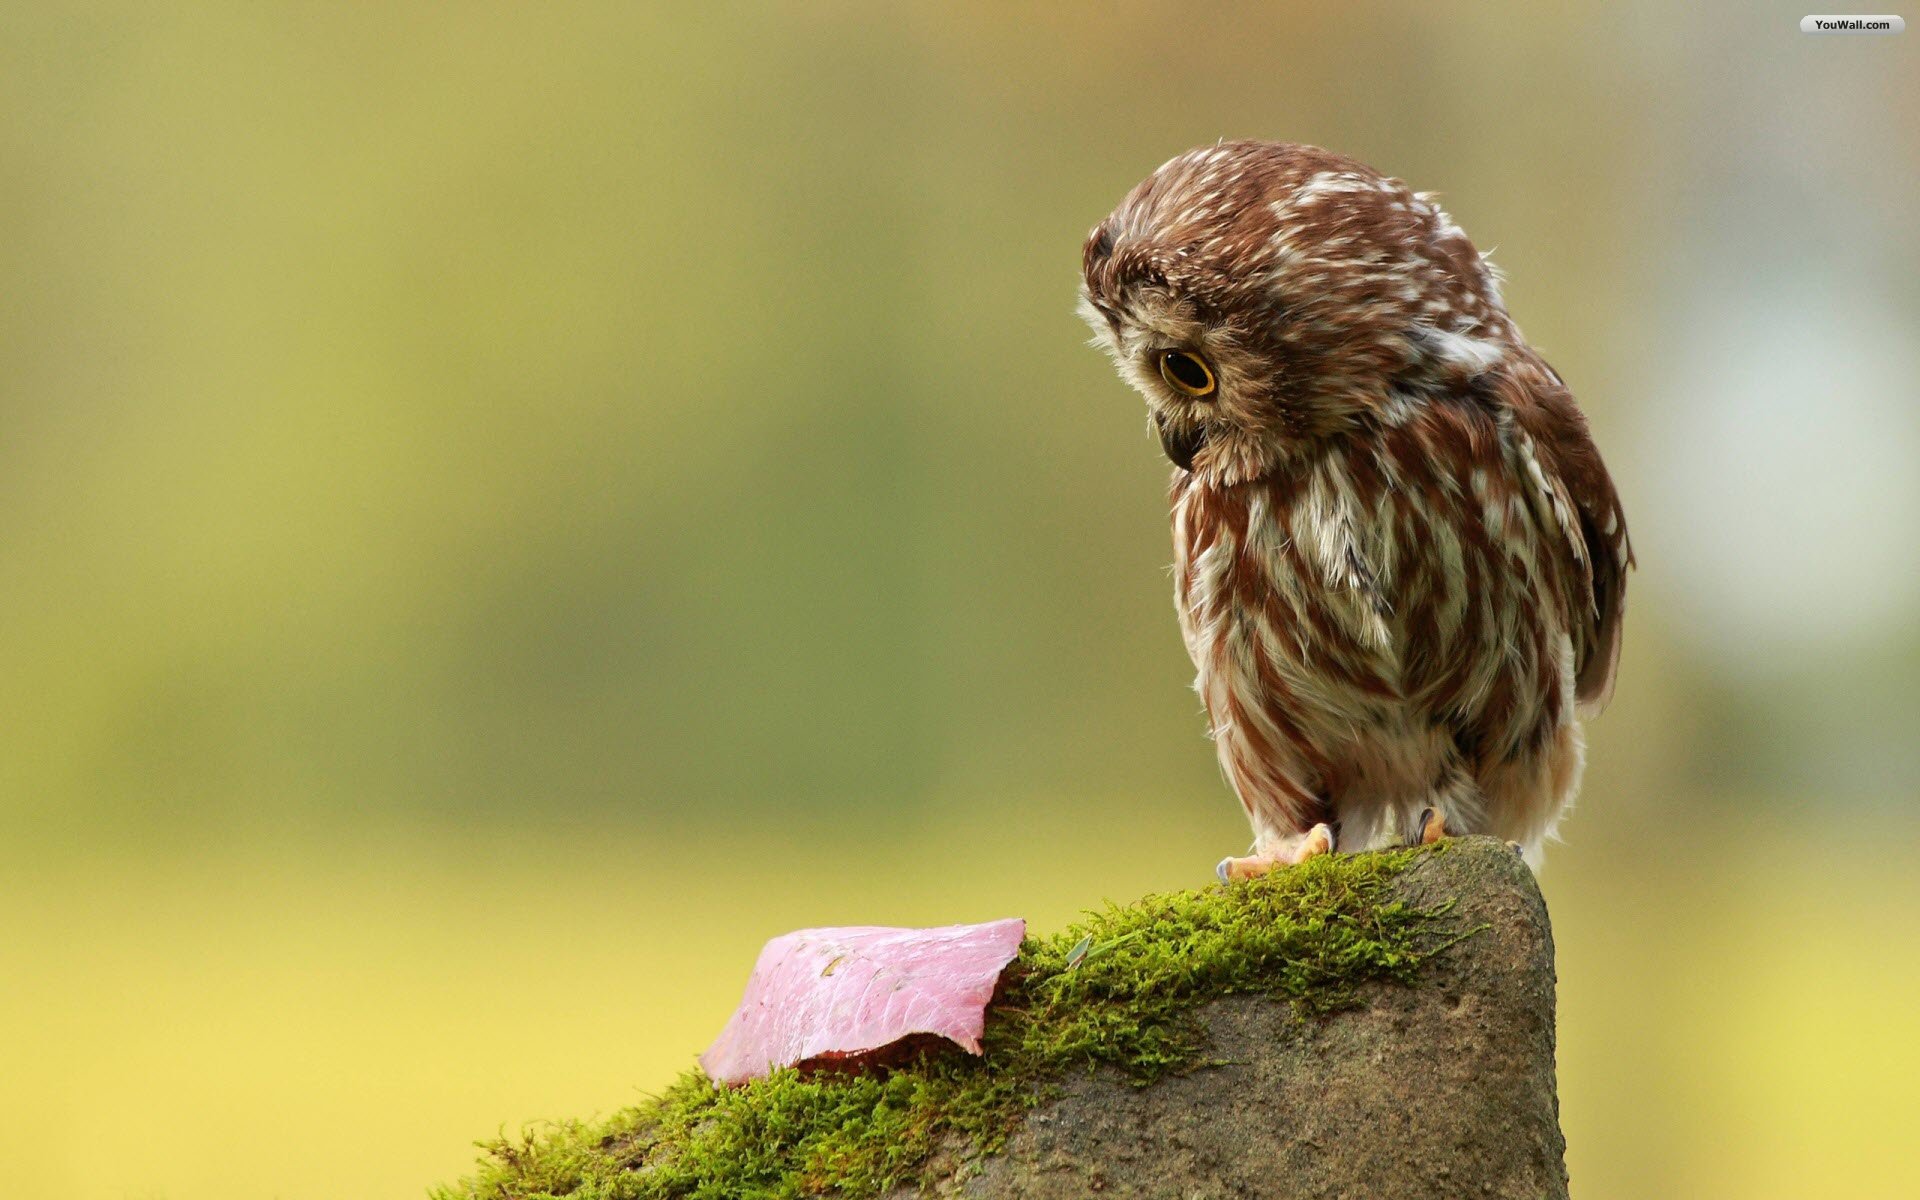 Owl Wallpaper Photo Desktop